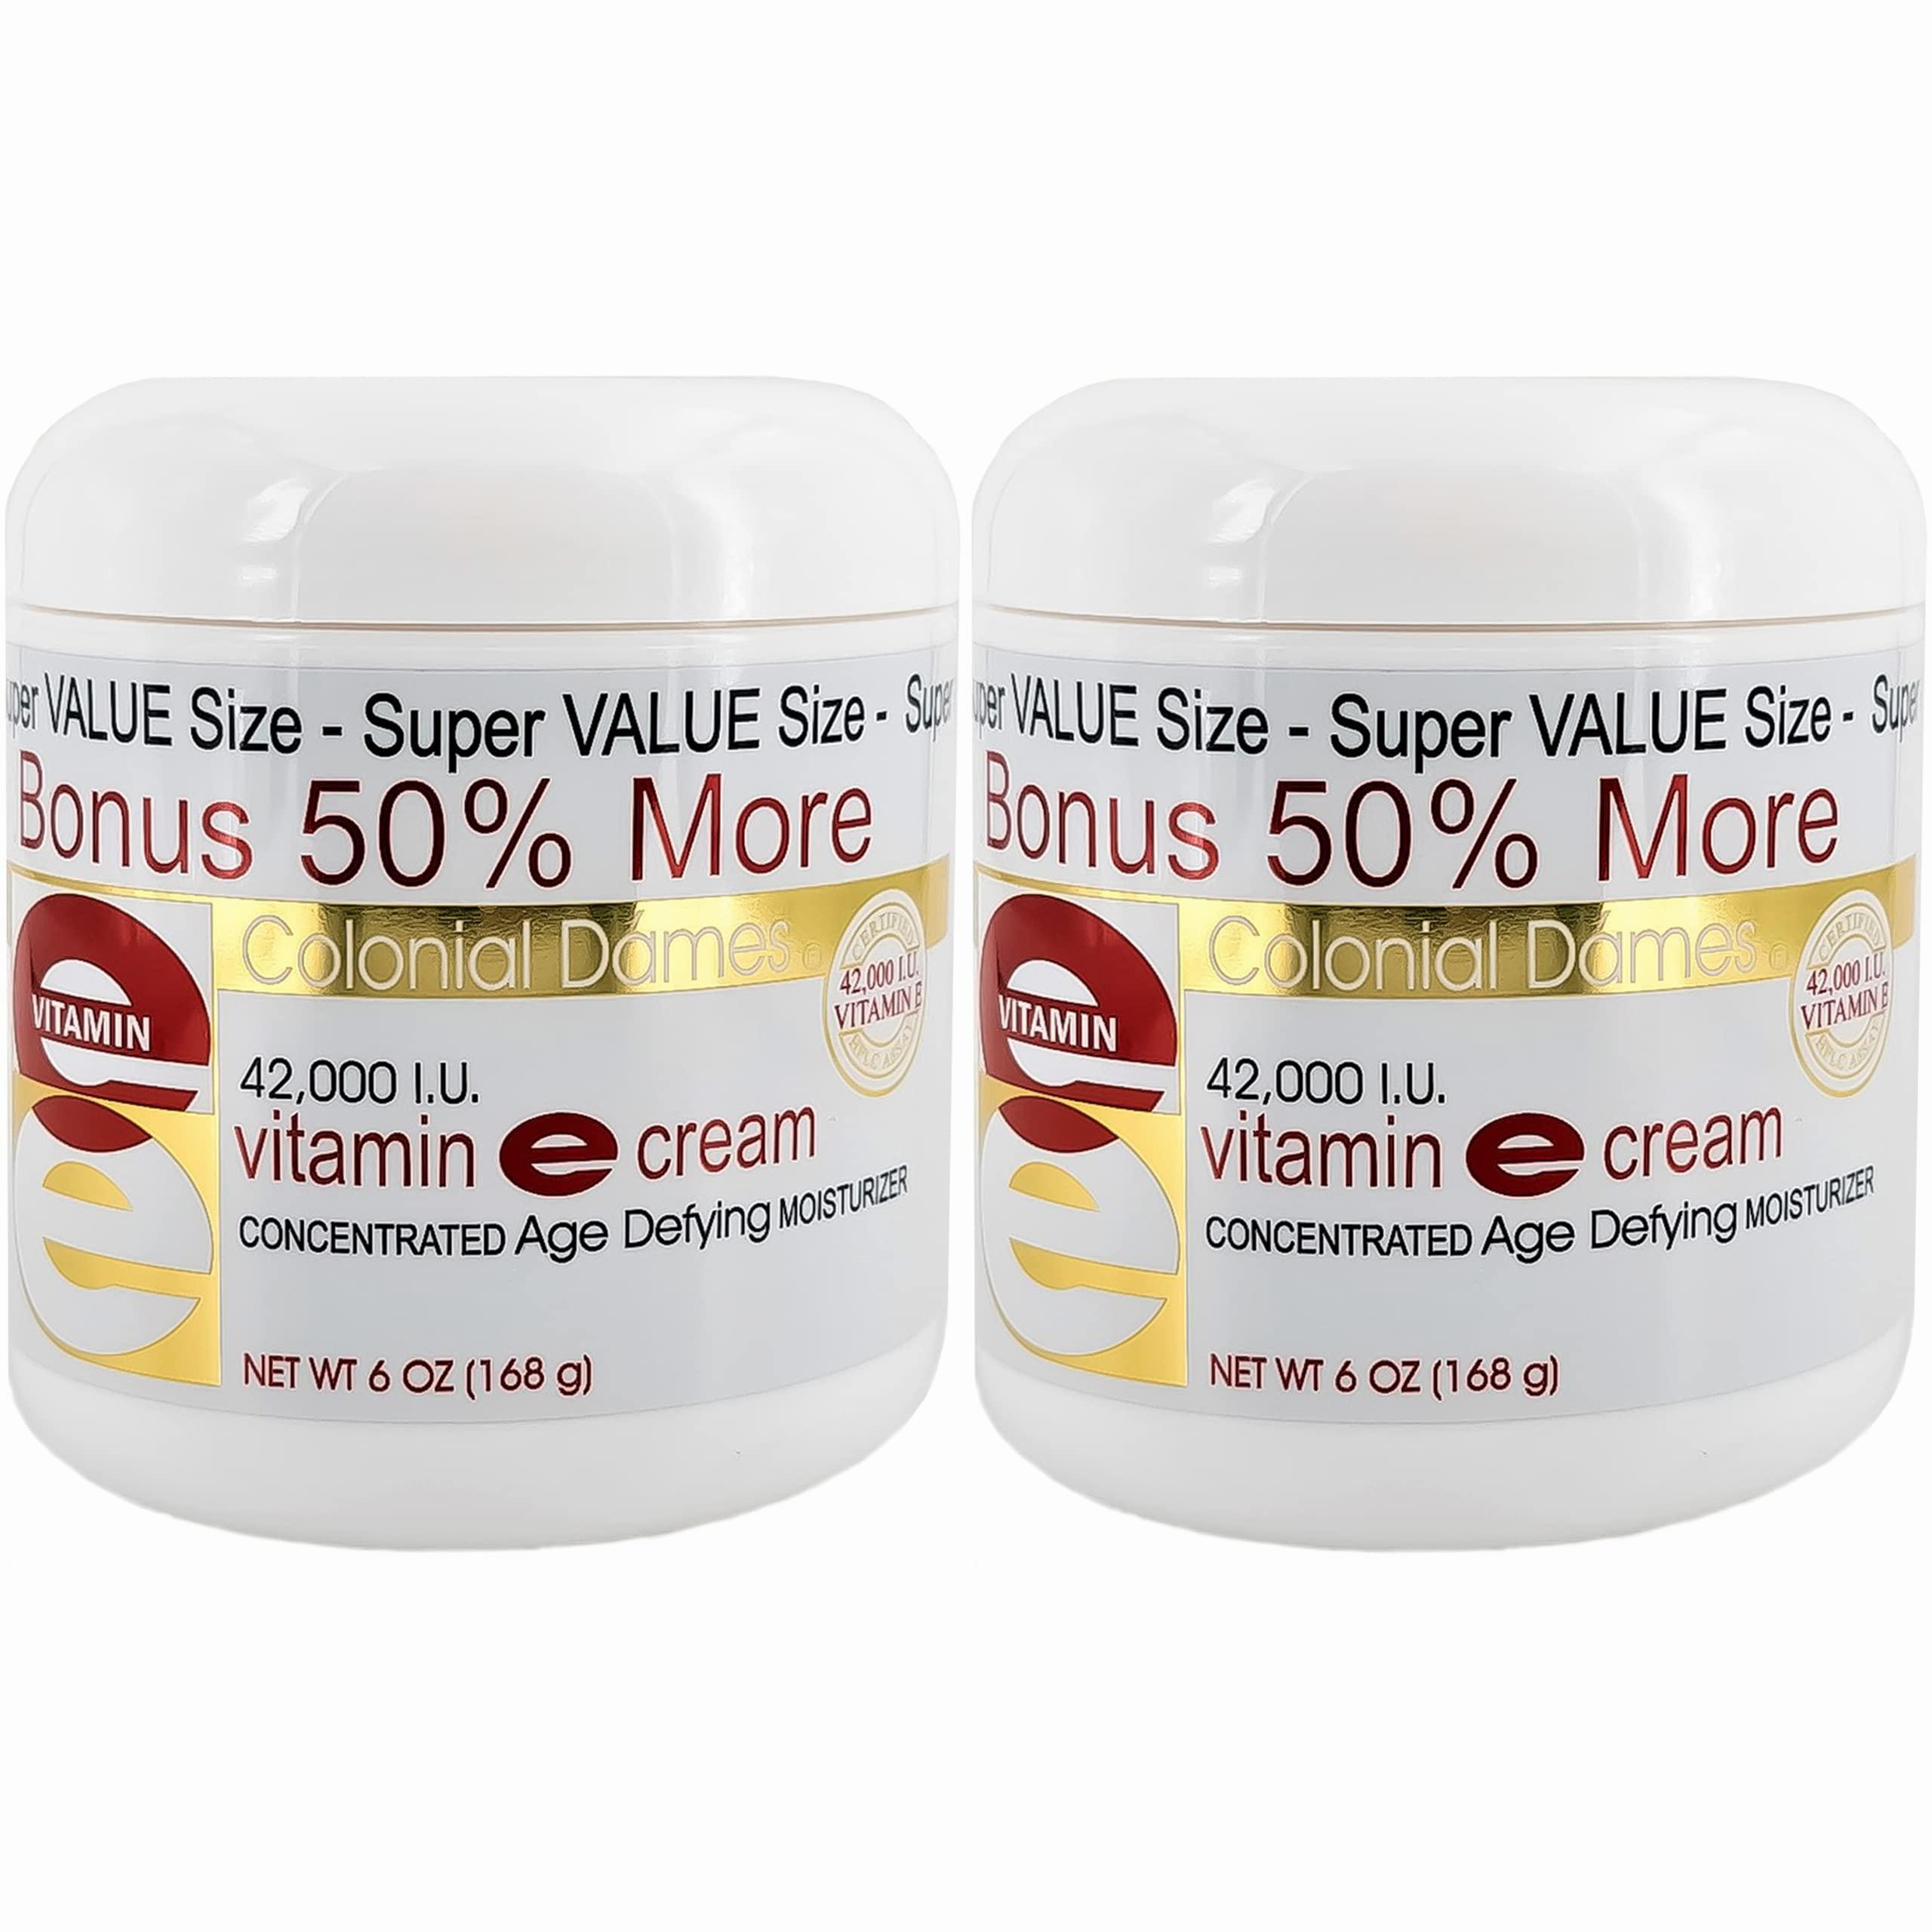 Two identical white tubs of Colonial Dames Vitamin E cream, each 6 oz.